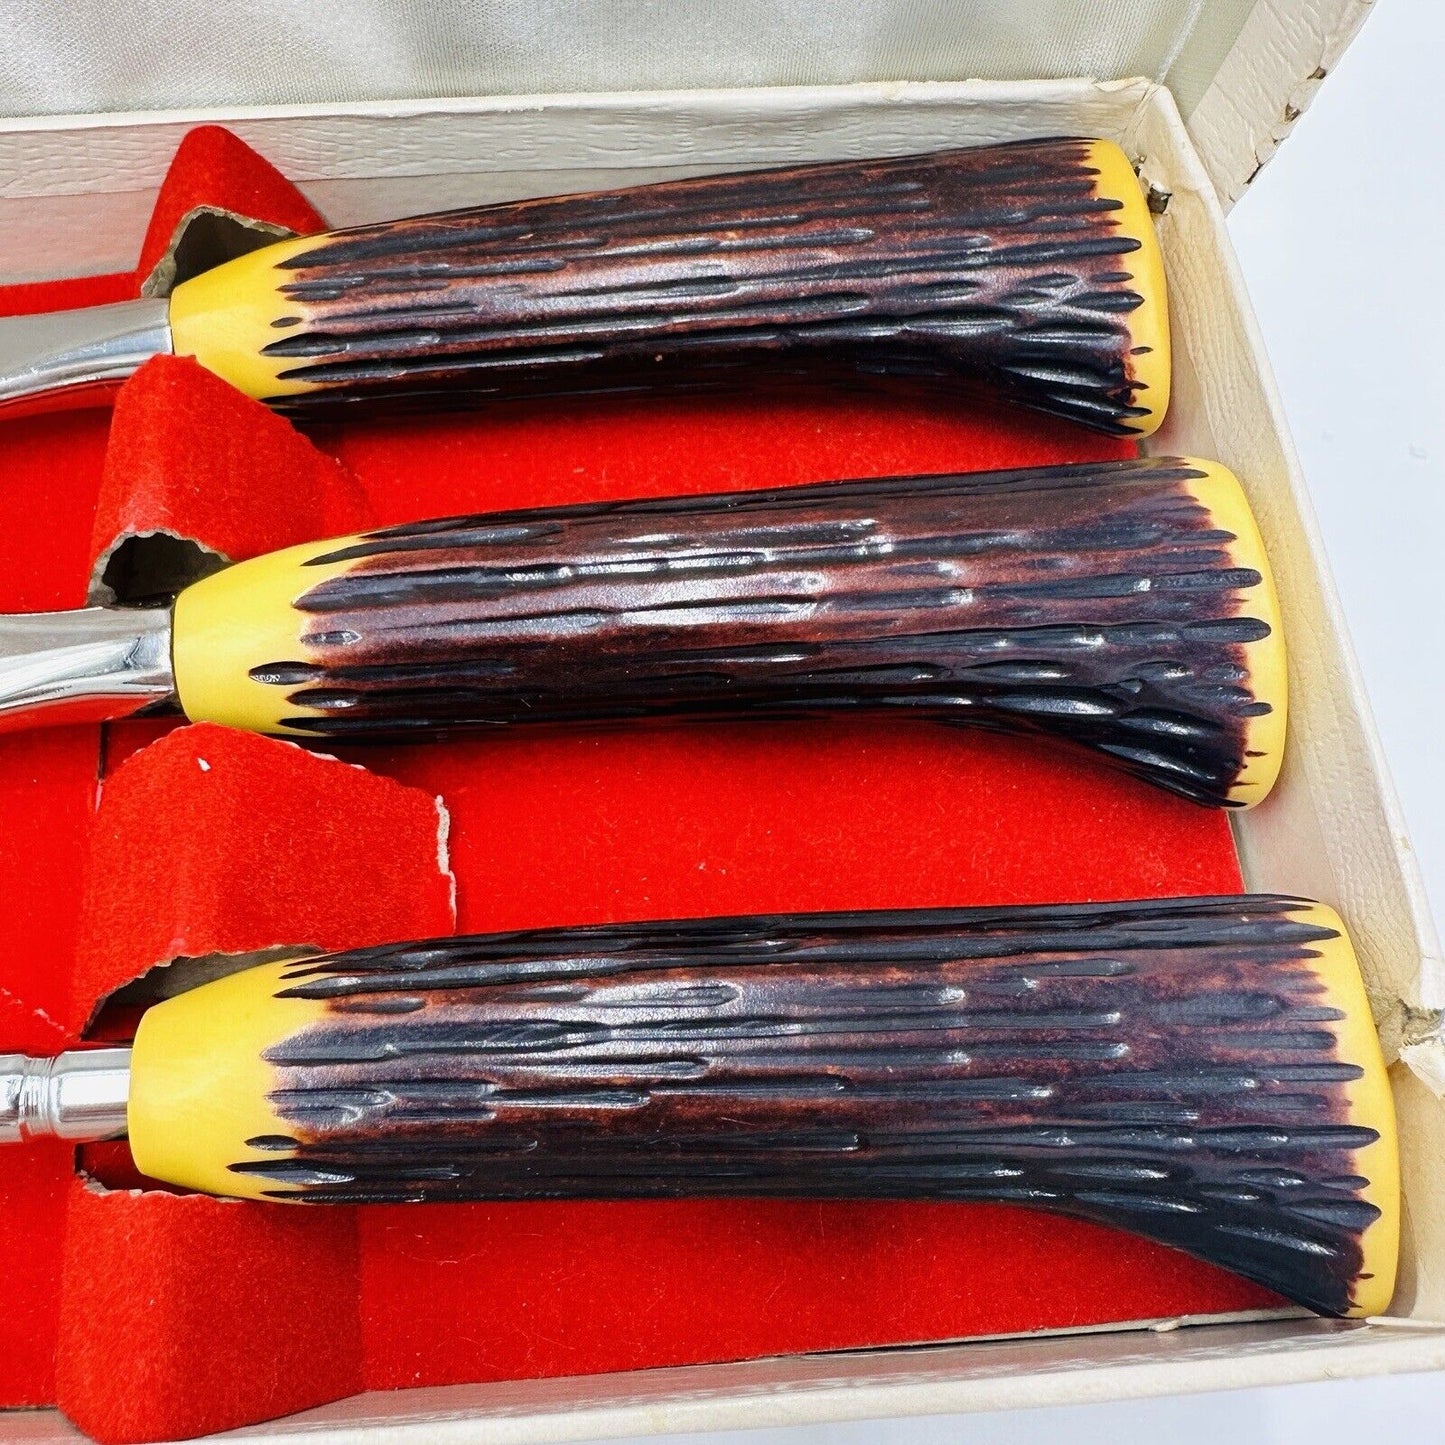 Washington Forge Cutlery Bakelite Staghorn  Vintage Carving Set stainless steel